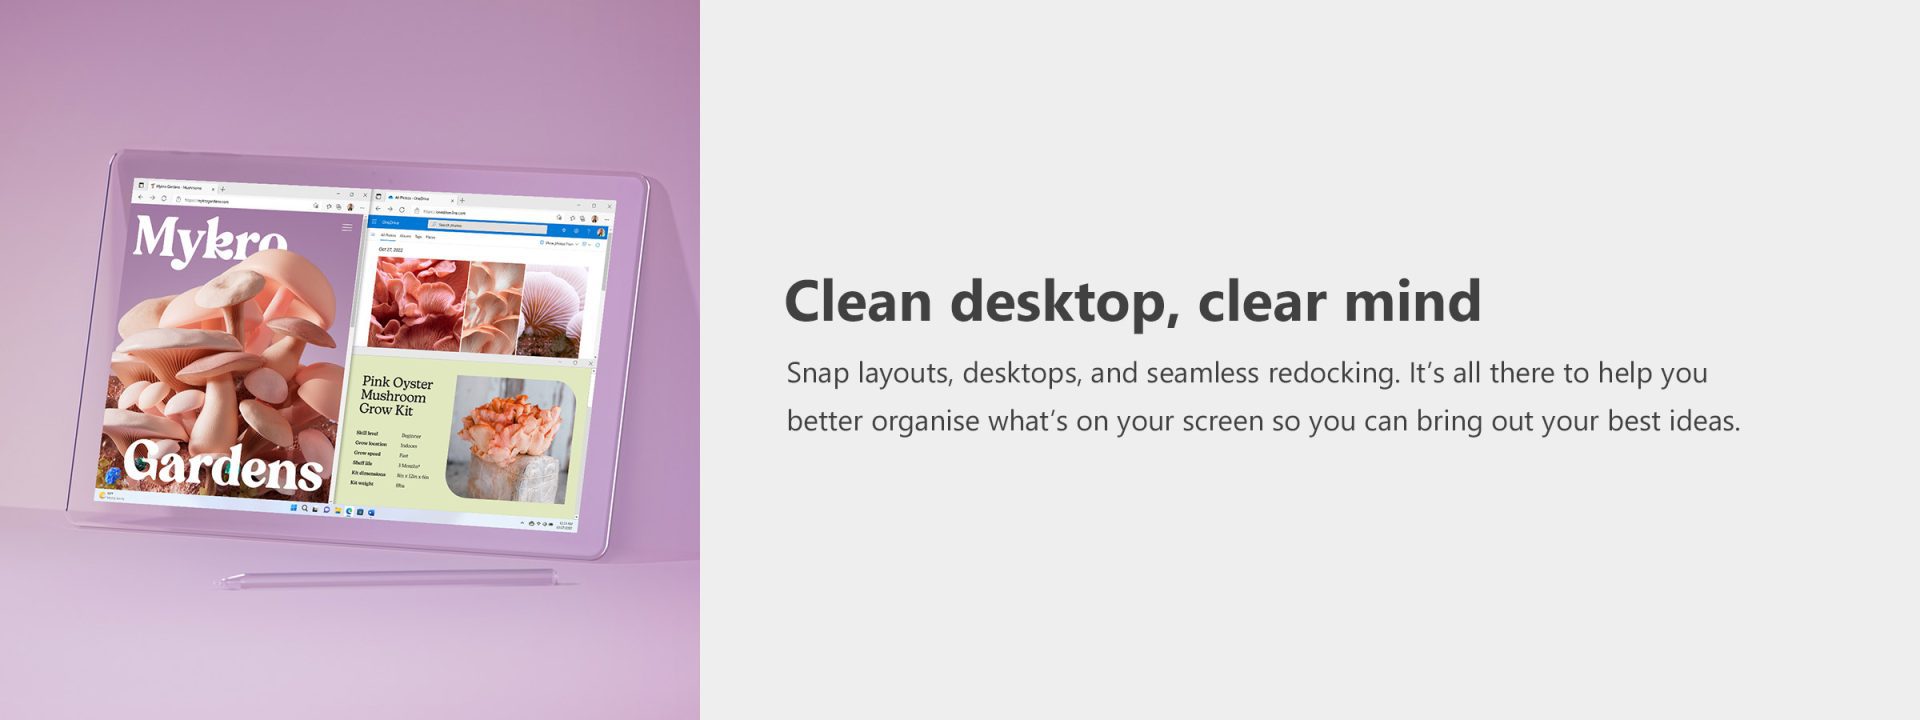 Windows 11 - Clean Desktop Clear Mind